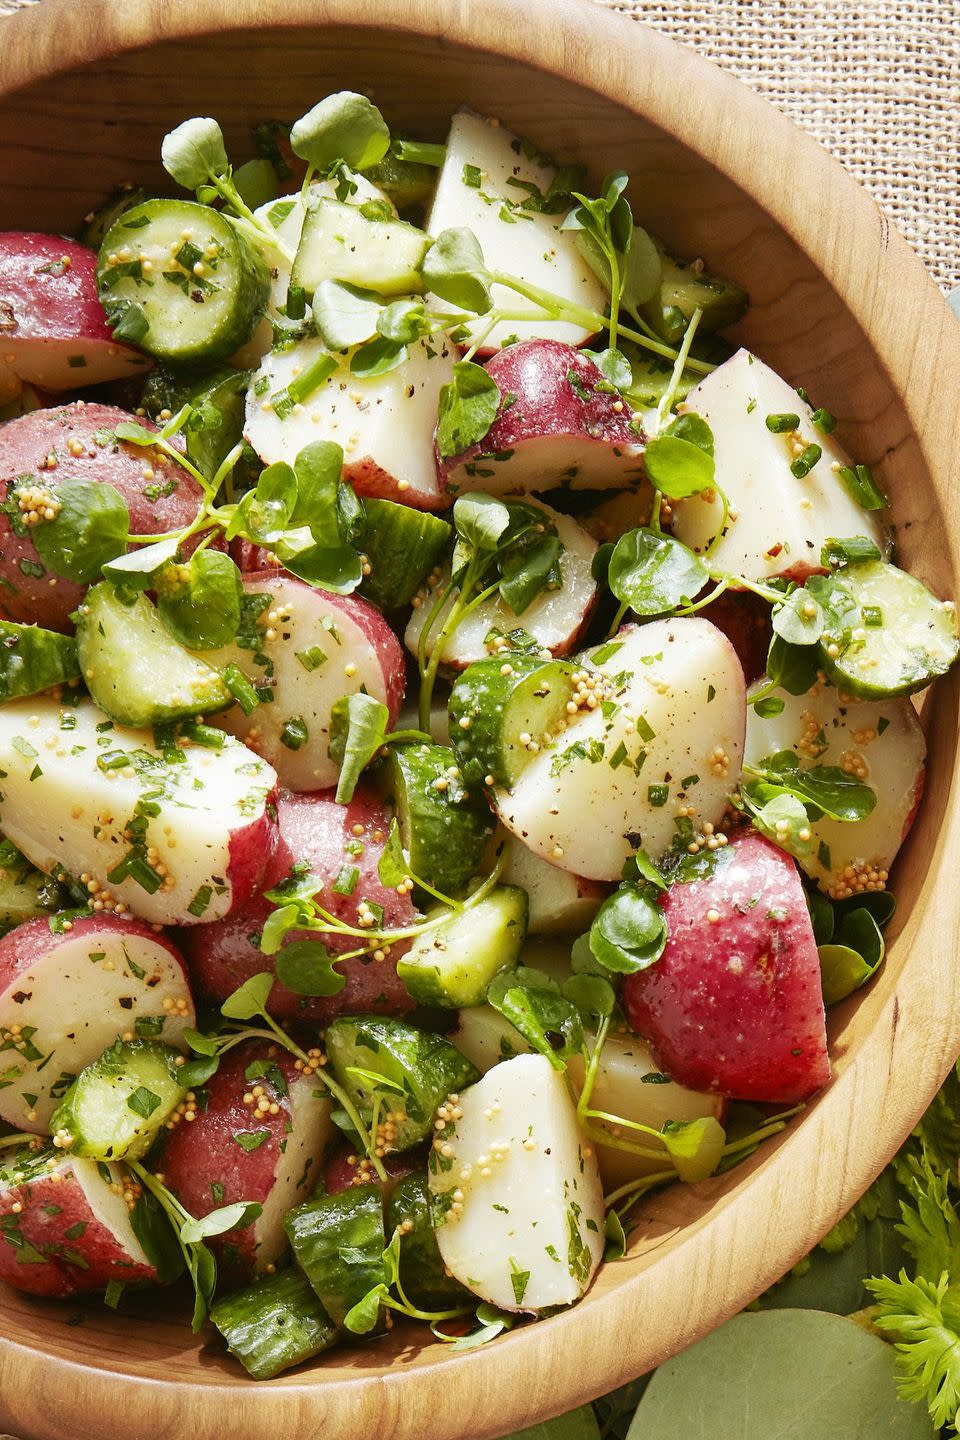 50) Tangy Potato Salad